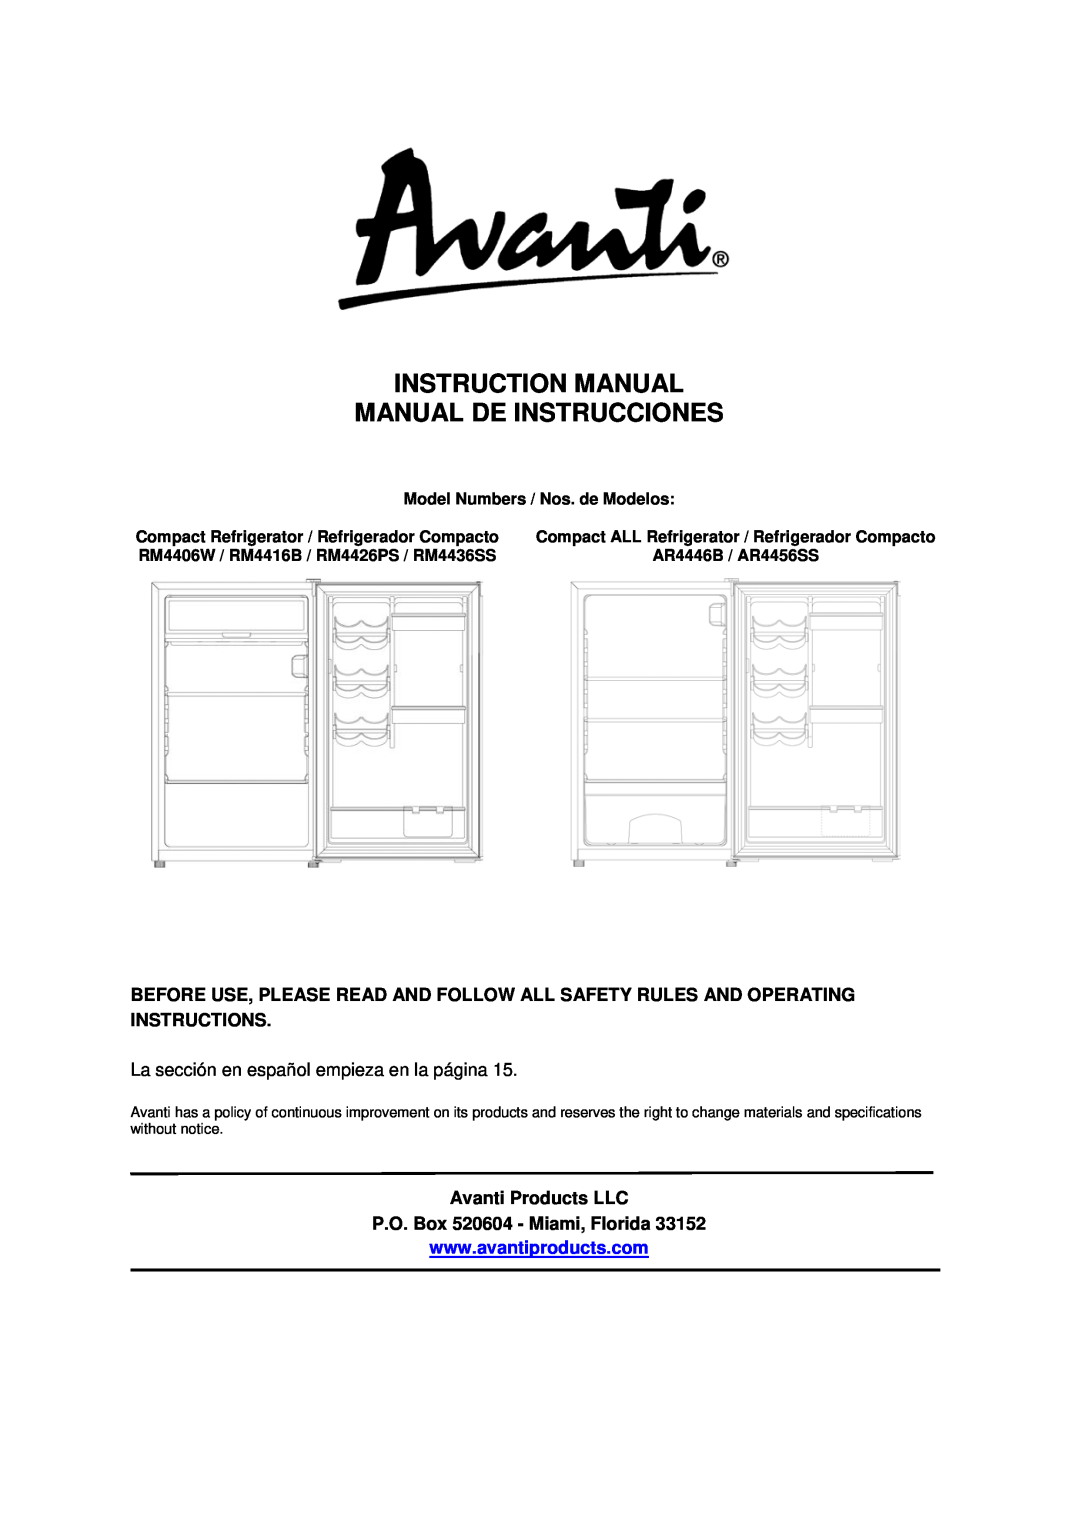 Avanti RM4406W instruction manual Avanti Products LLC, P.O. Box 520604 - Miami, Florida, Model Numbers / Nos. de Modelos 